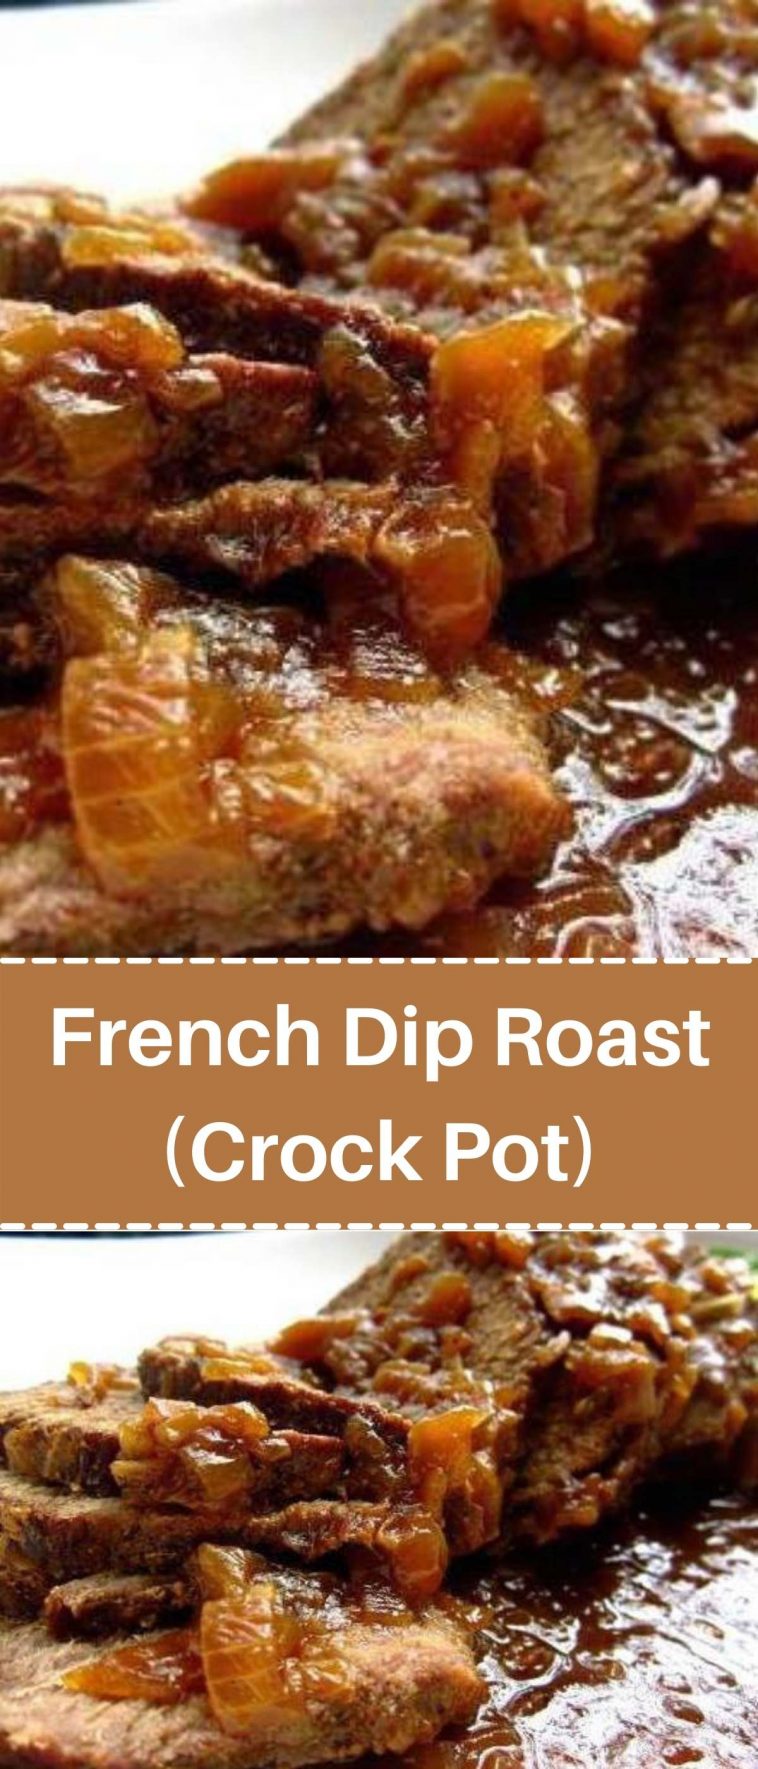 French Dip Roast (Crock Pot)